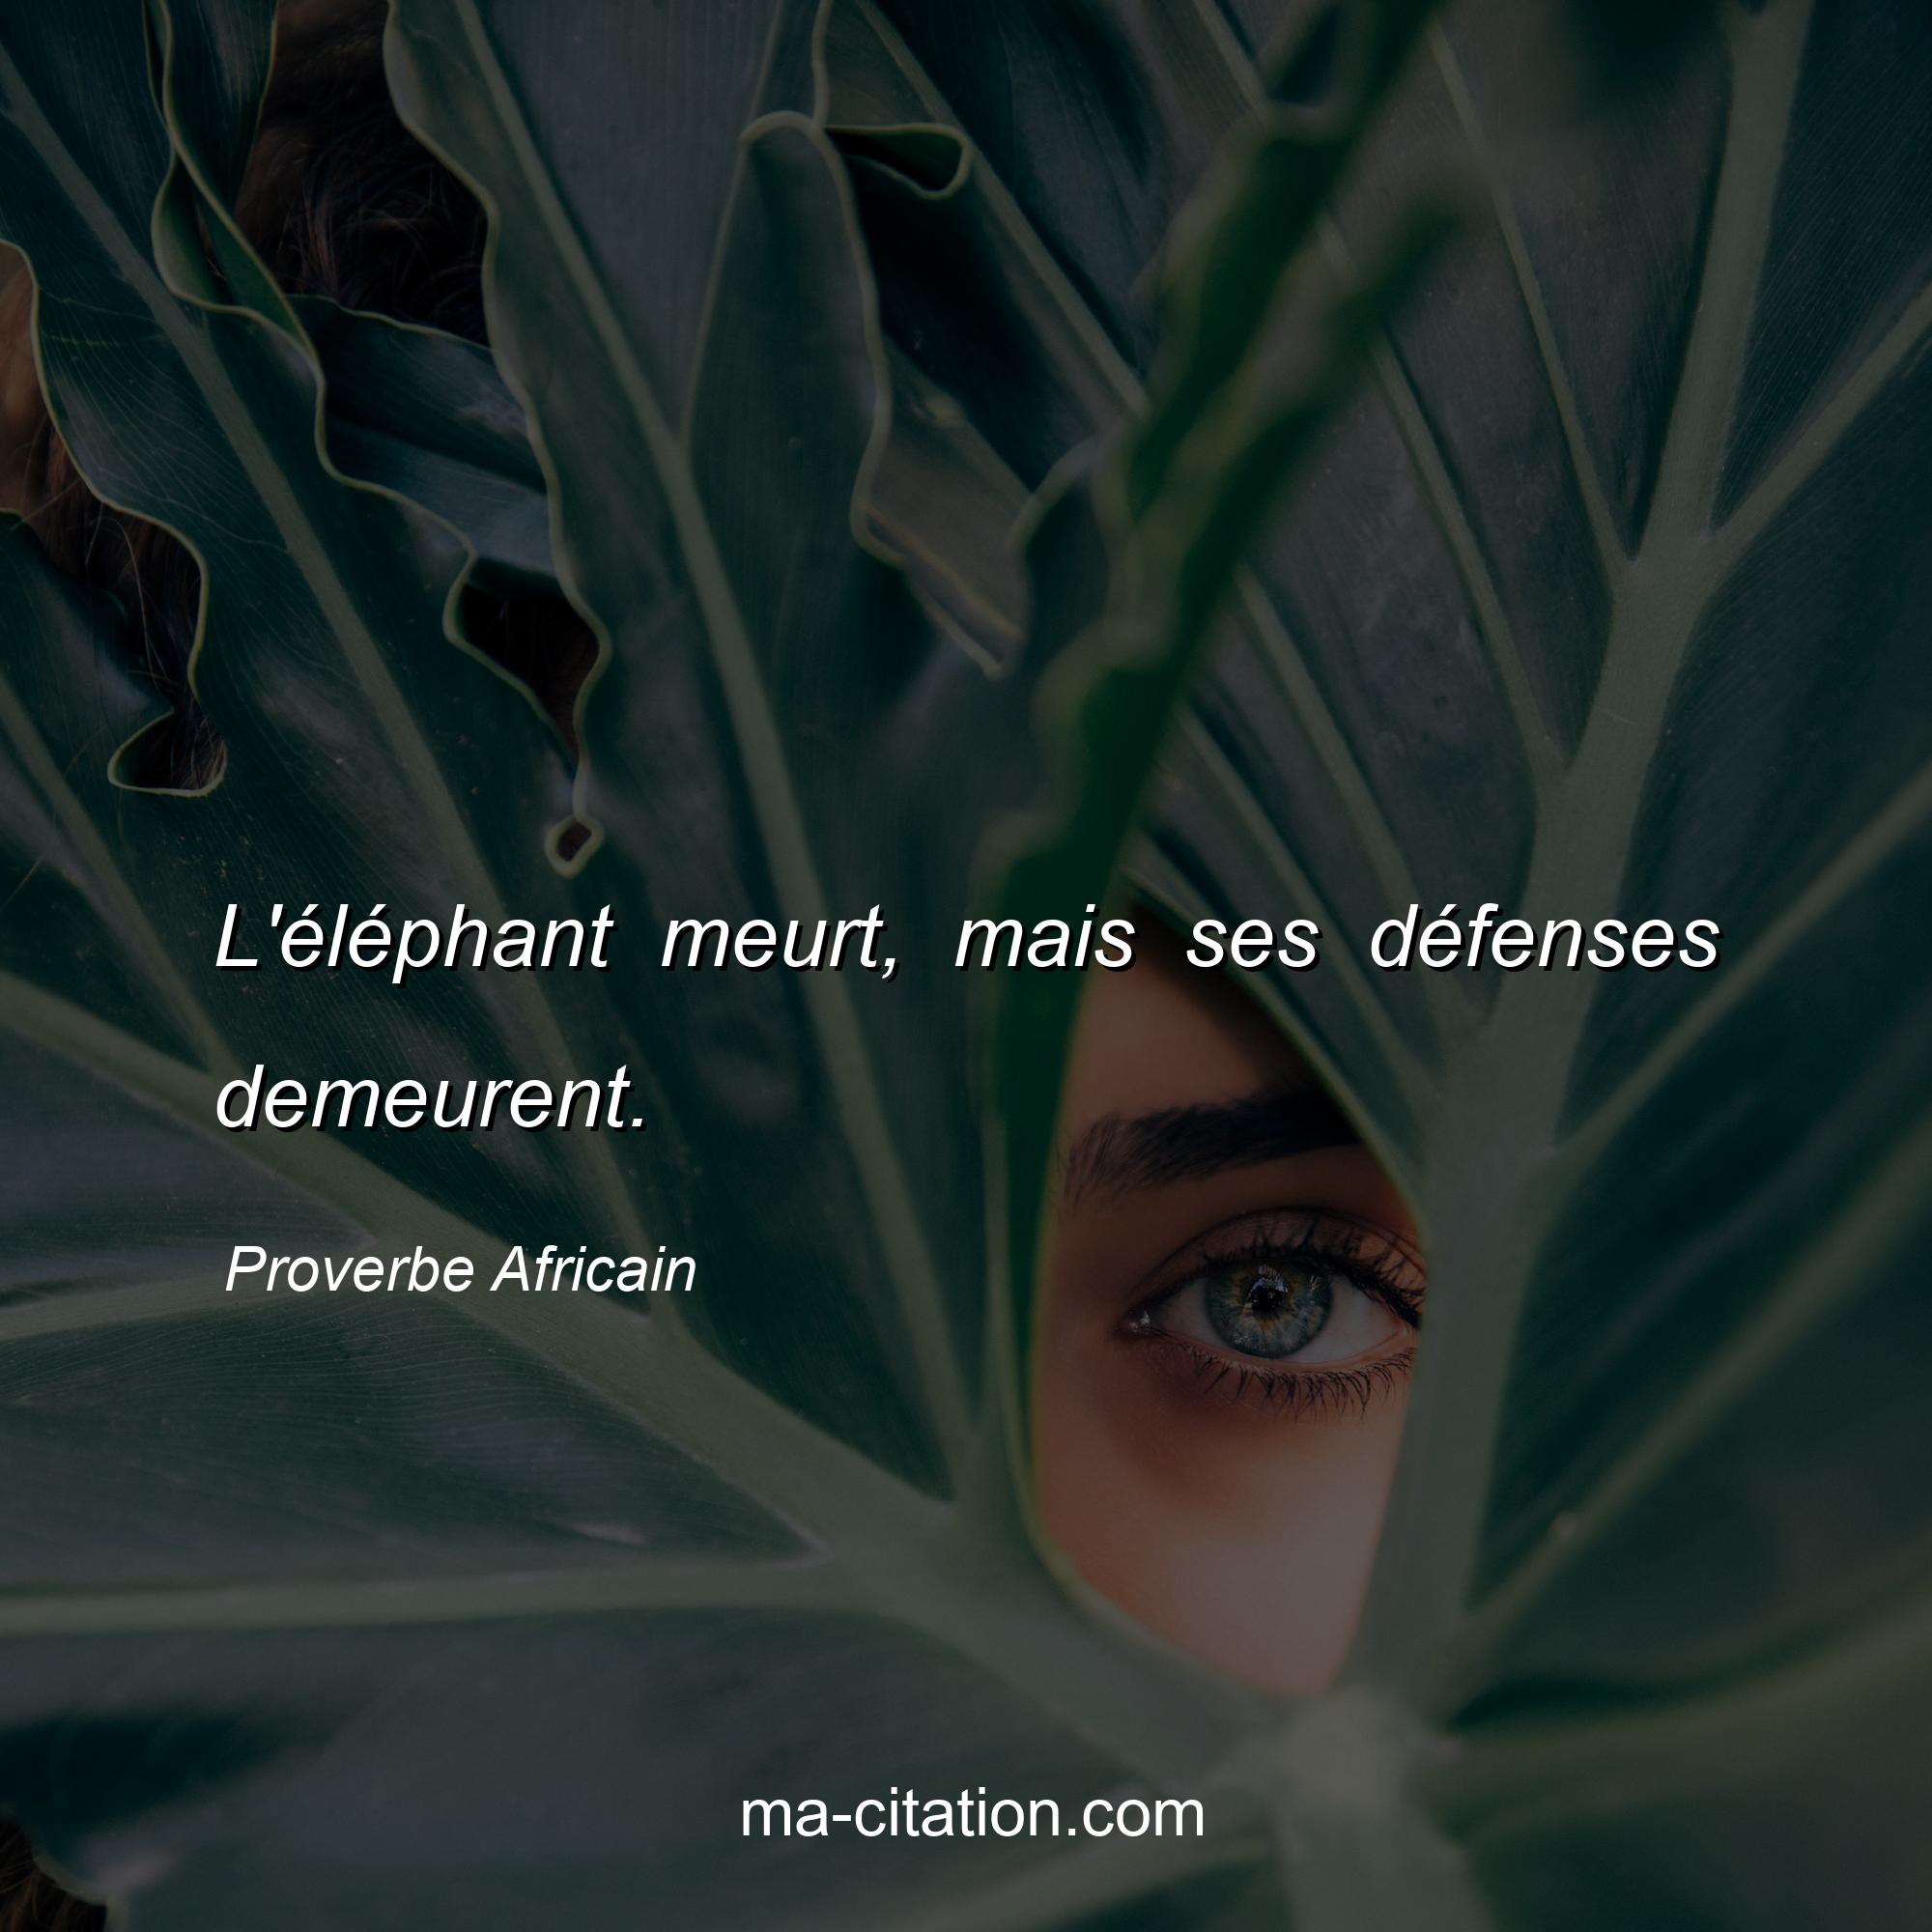 Proverbe Africain : L'éléphant meurt, mais ses défenses demeurent.